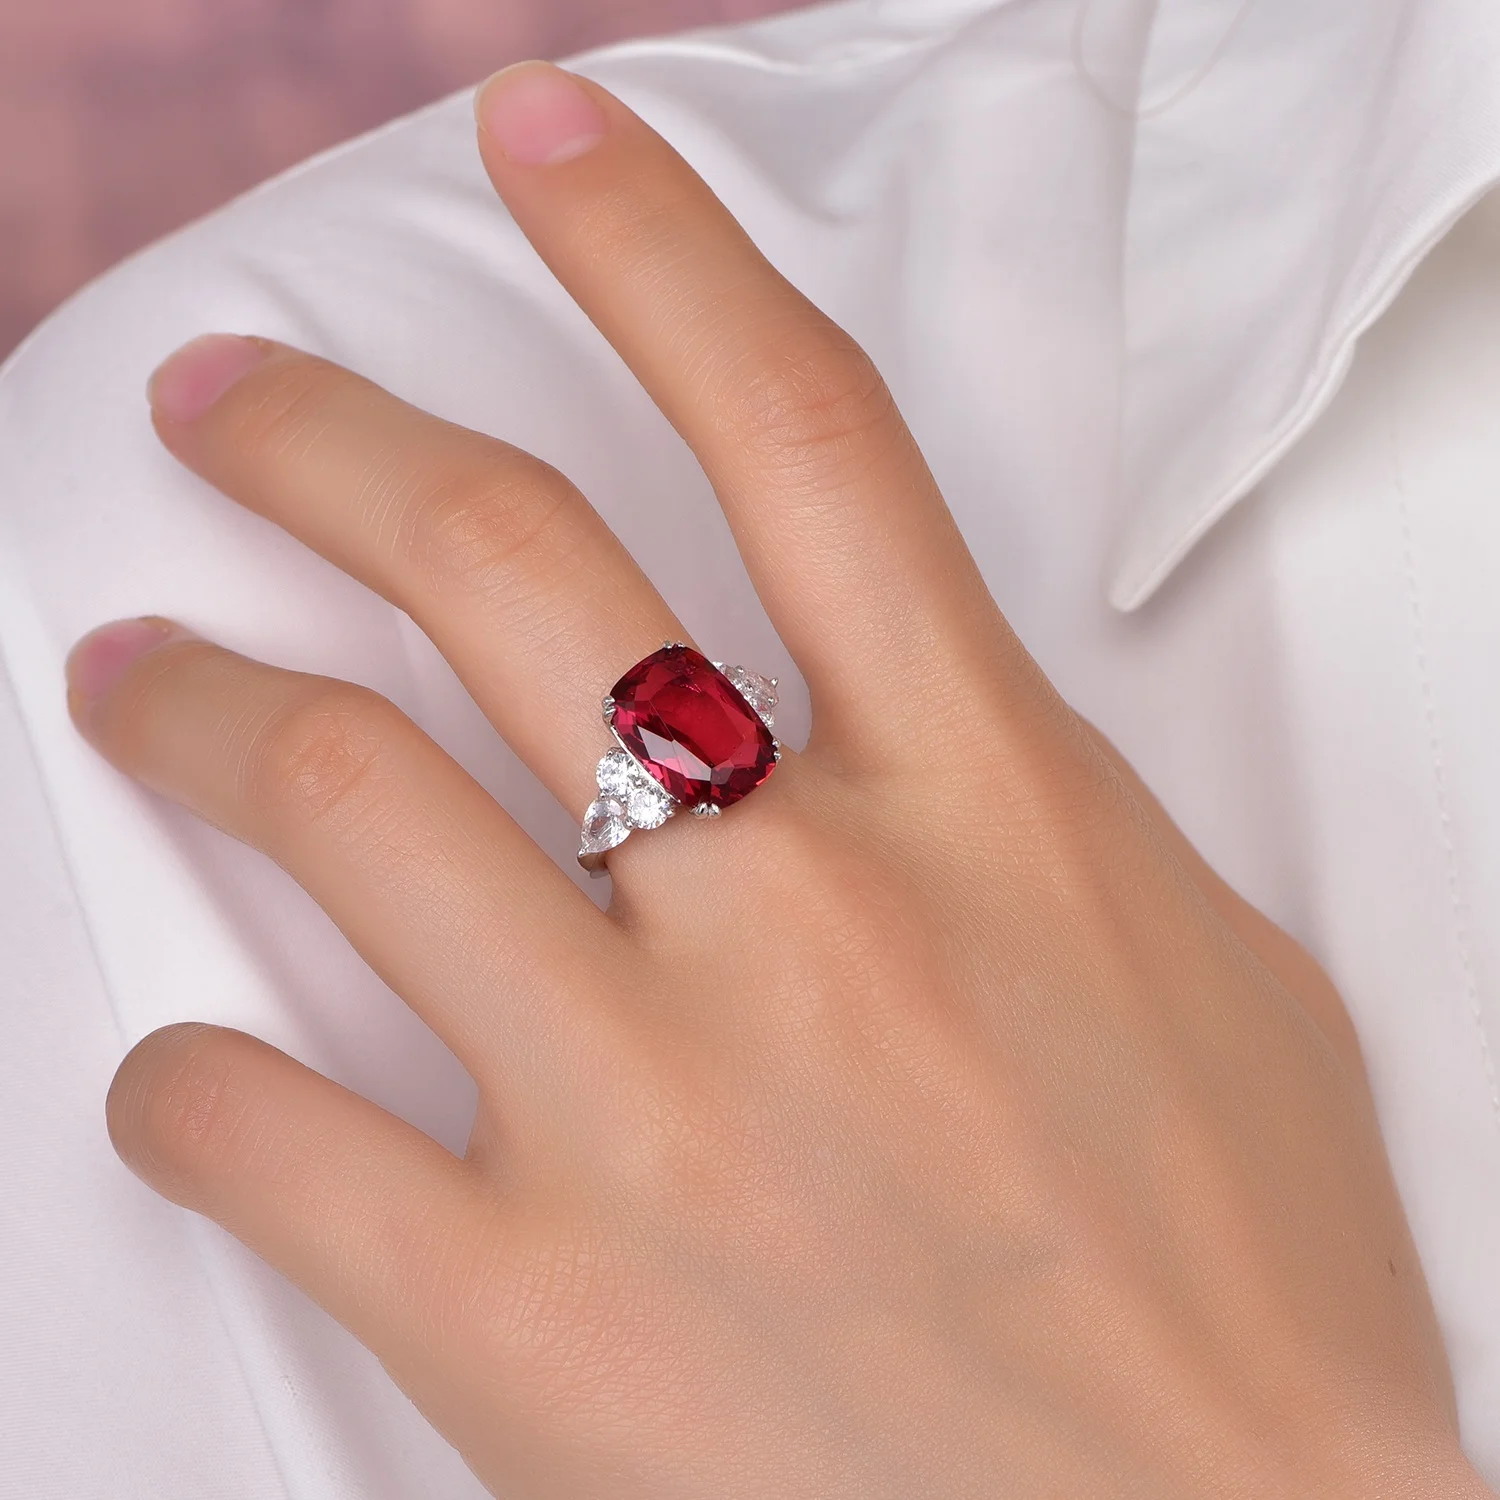 white gold wedding ring jewelry silver engagement rings cushion cut ruby red corundum diamond ring